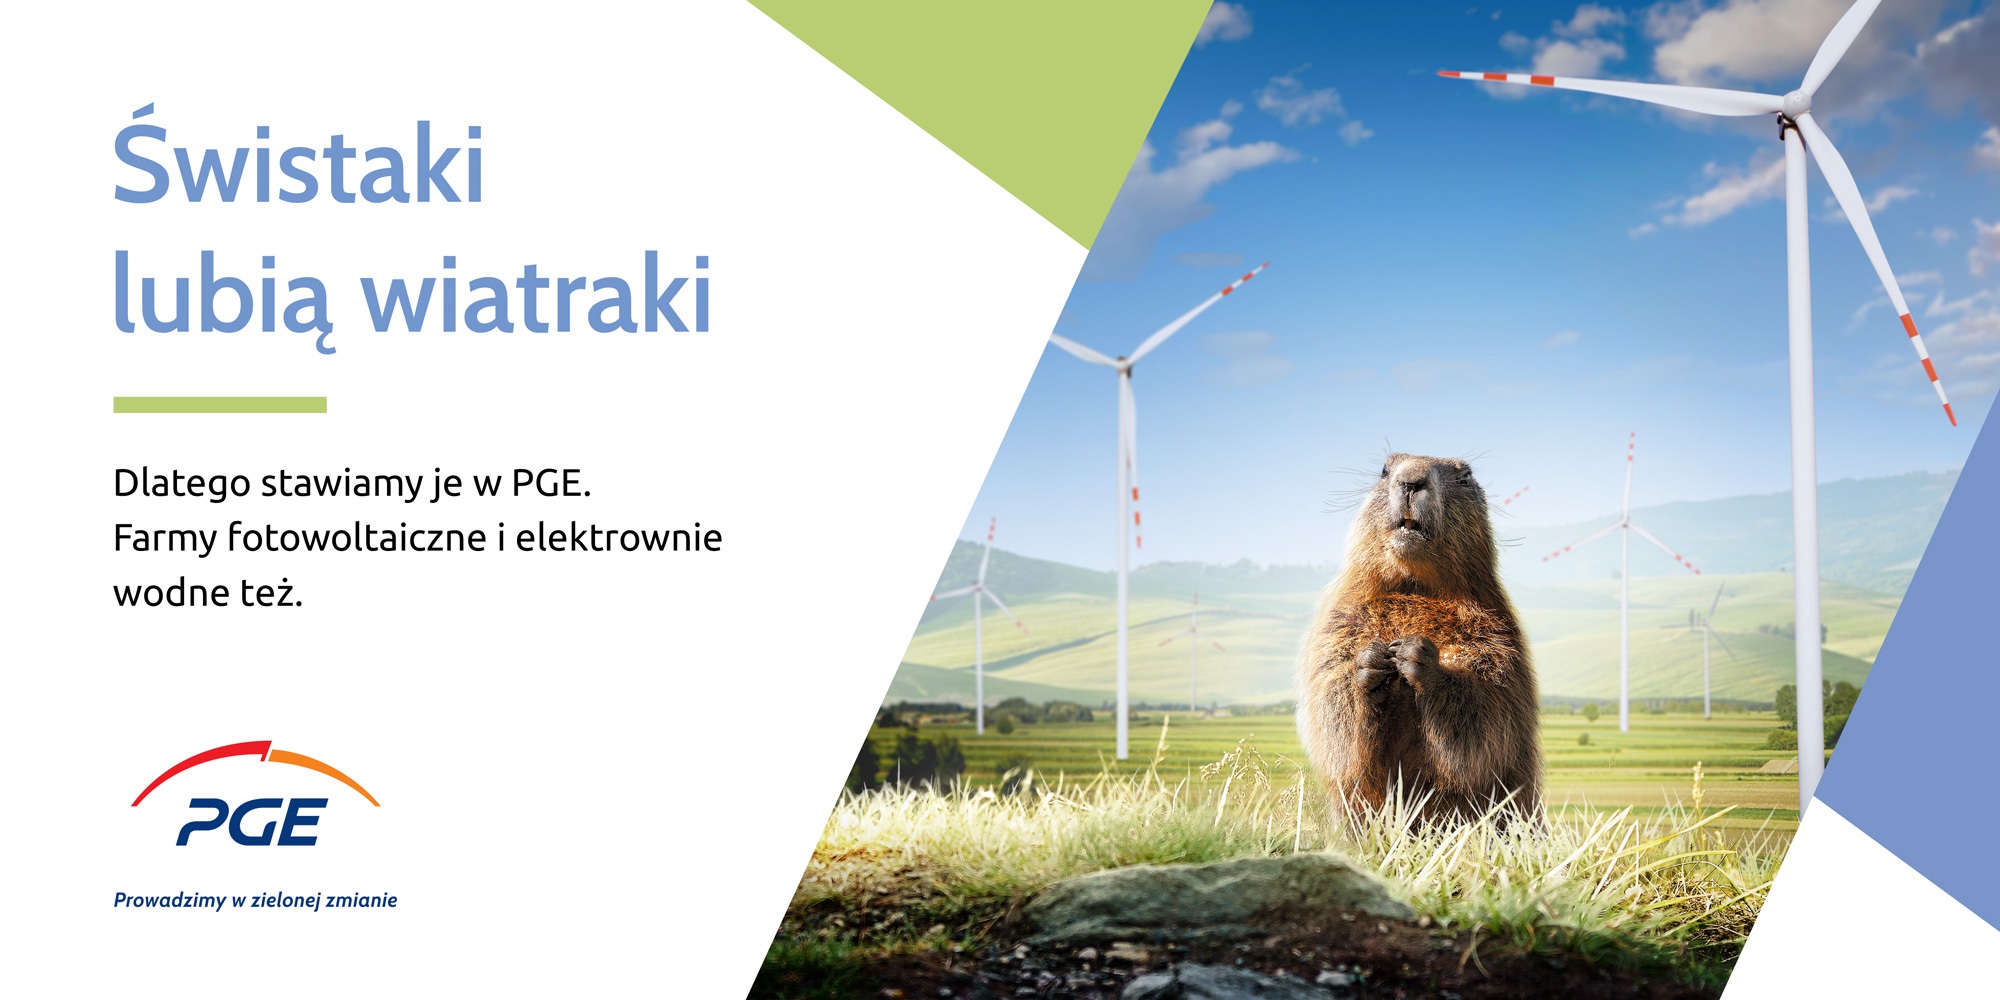 mat.: PGE Polska Grupa Energetyczna